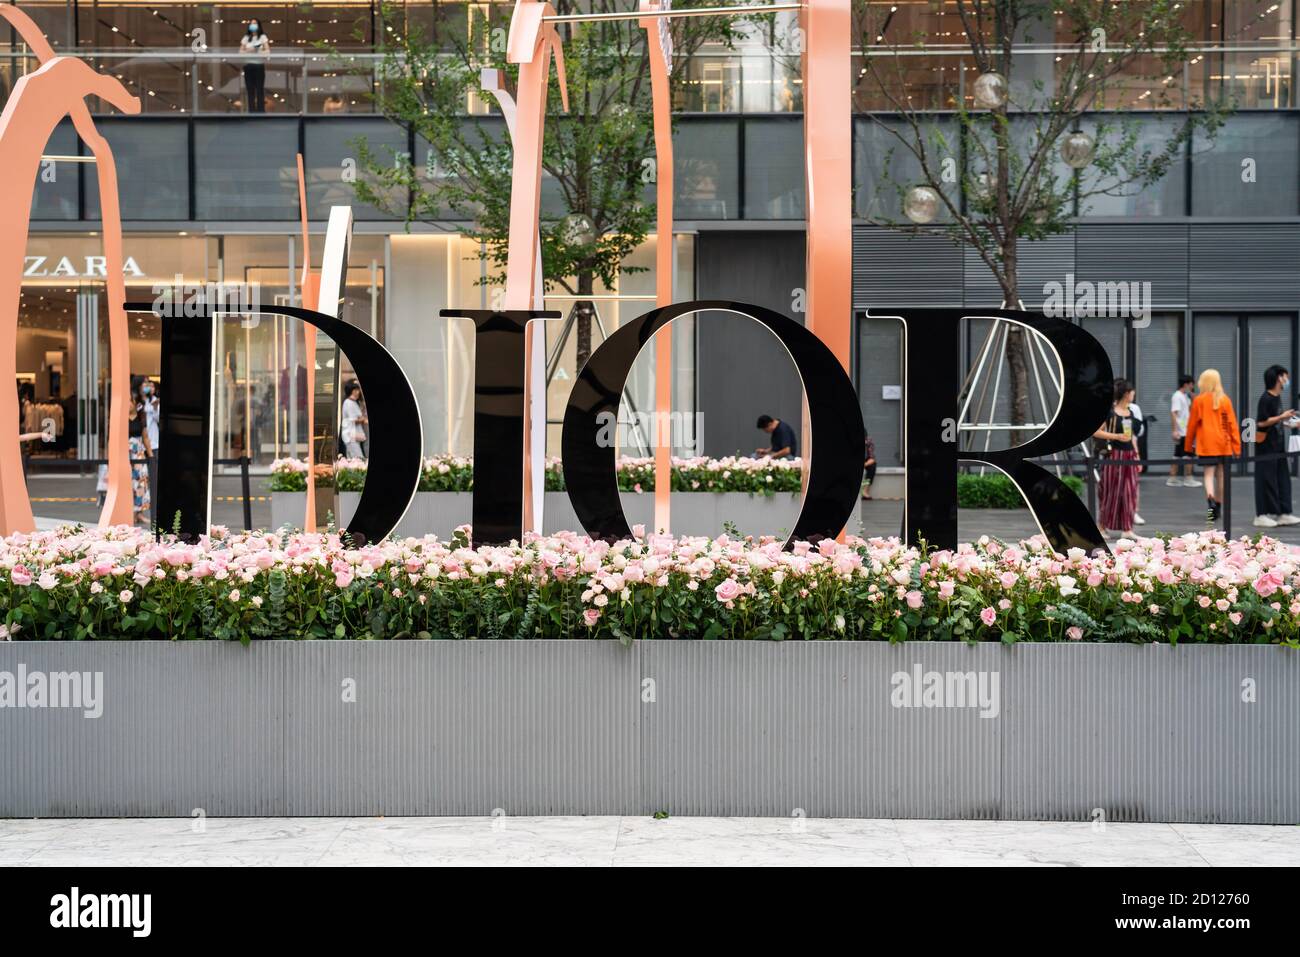 French luxury goods company Christian Dior logo seen in Shenzhen